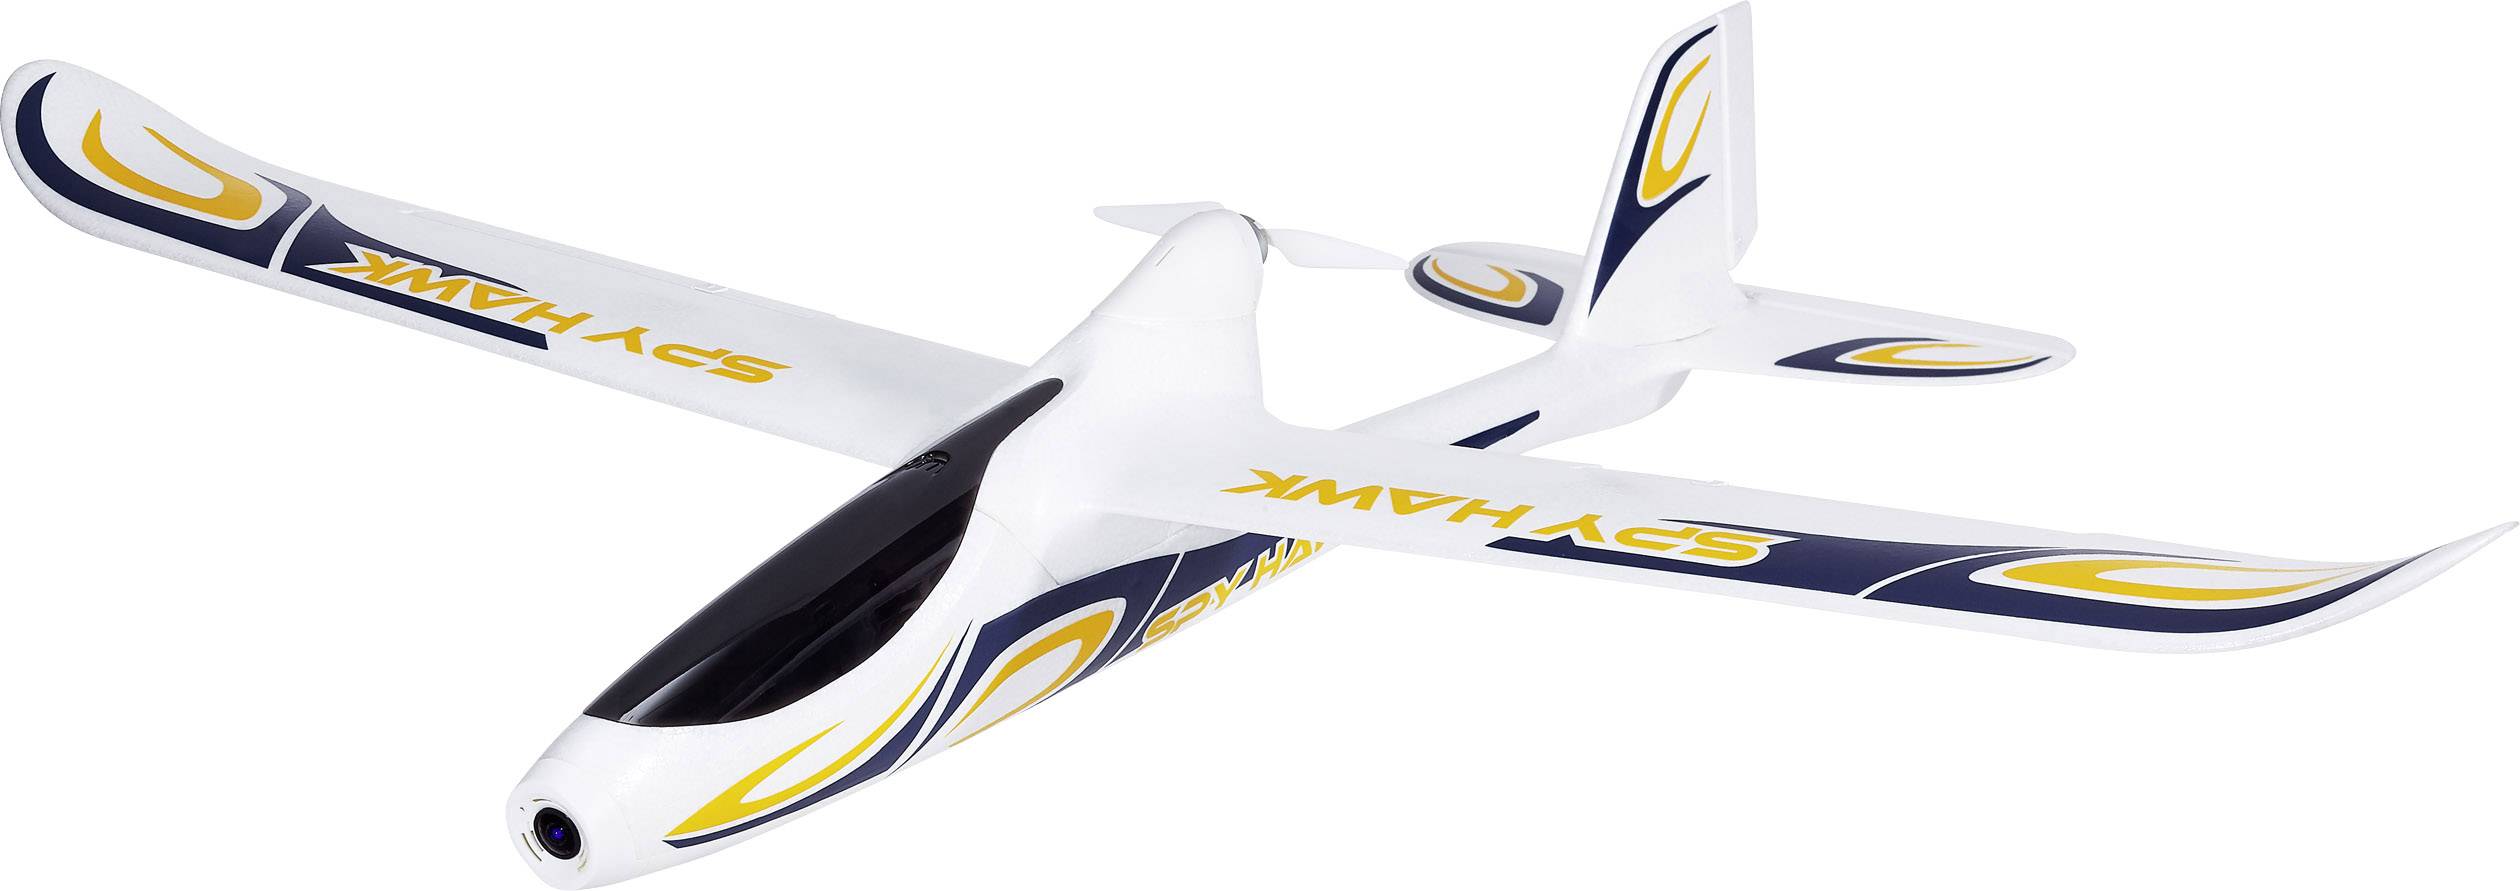 Diplomatieke kwesties Soldaat dek Hubsan Spy Hawk RC model glider RtF 1000 mm | Conrad.com